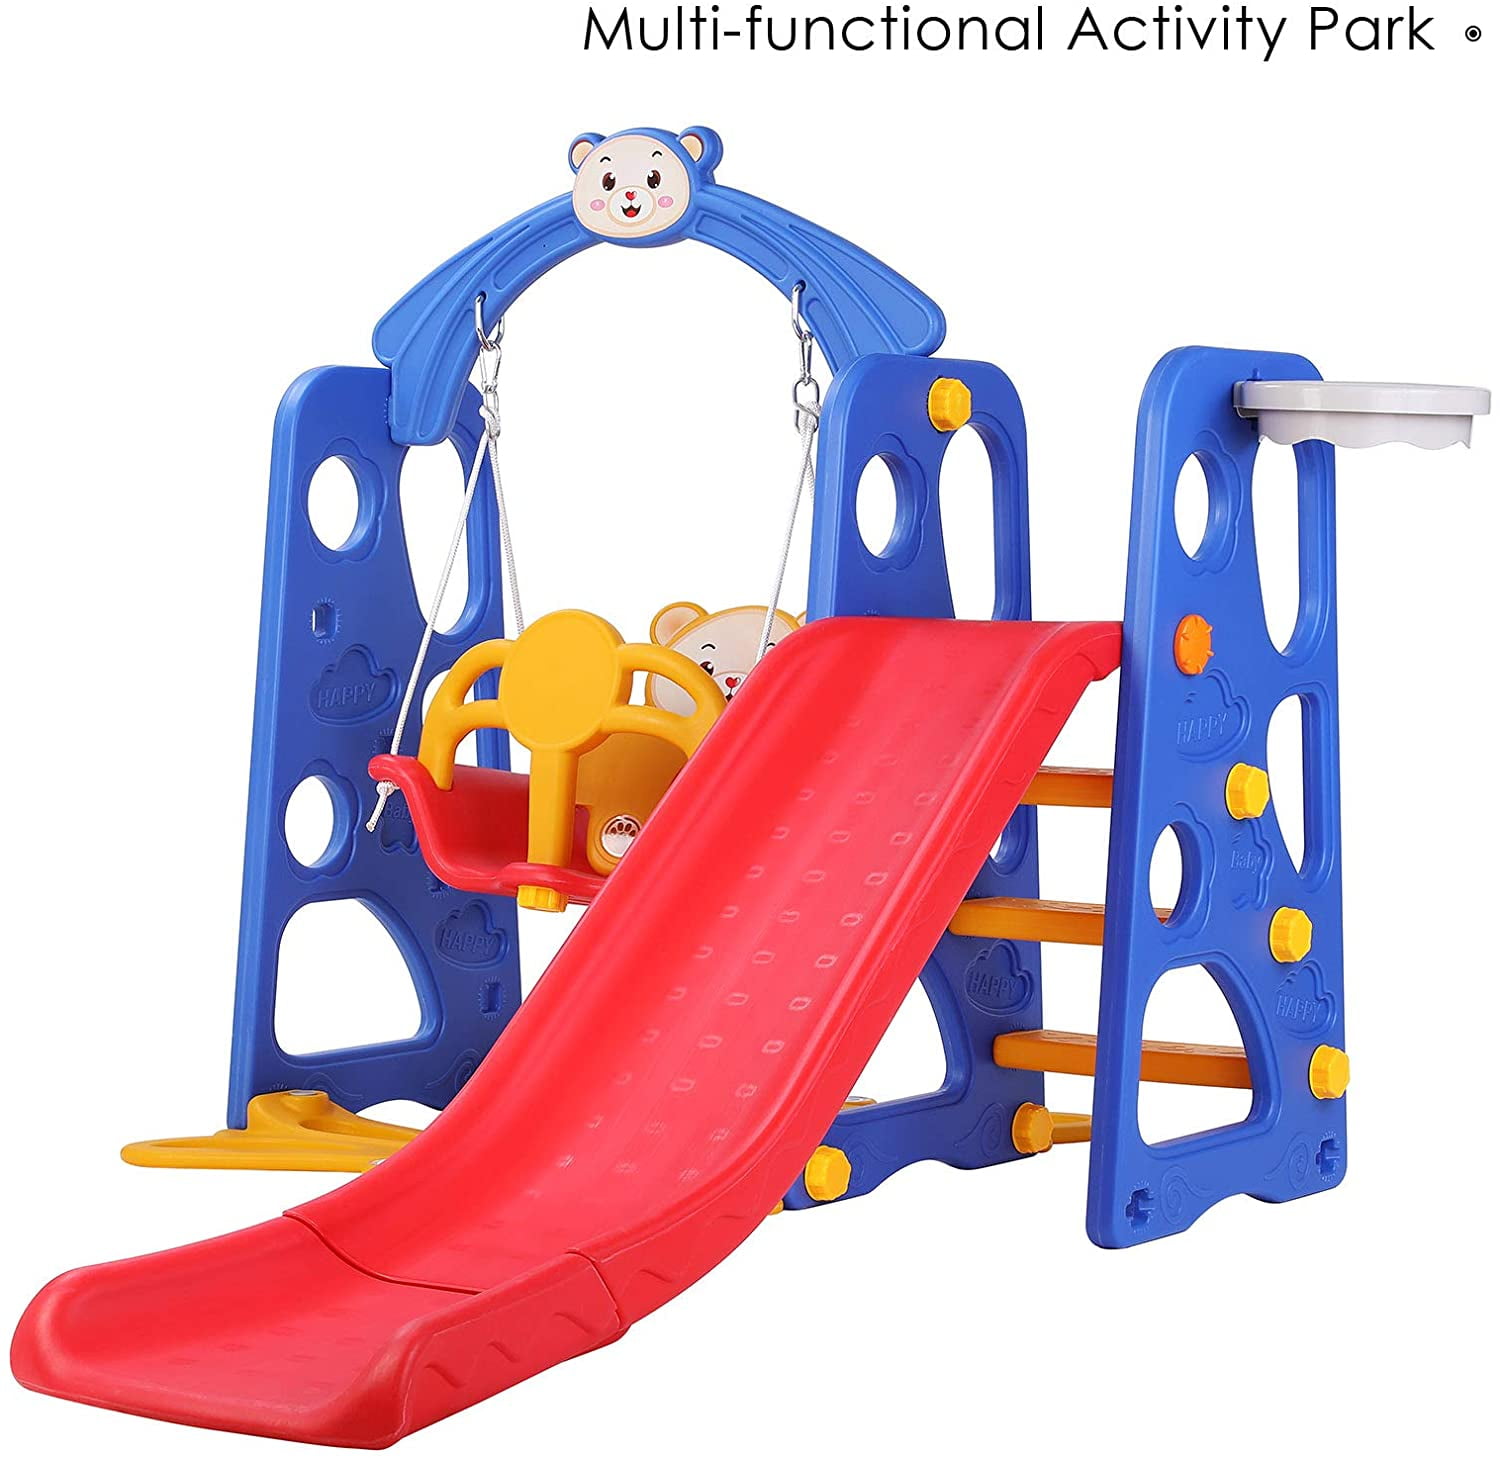 Kids Play Set Slide First Climber Toddler Indoor Backyard Gym Preschool Daycare 